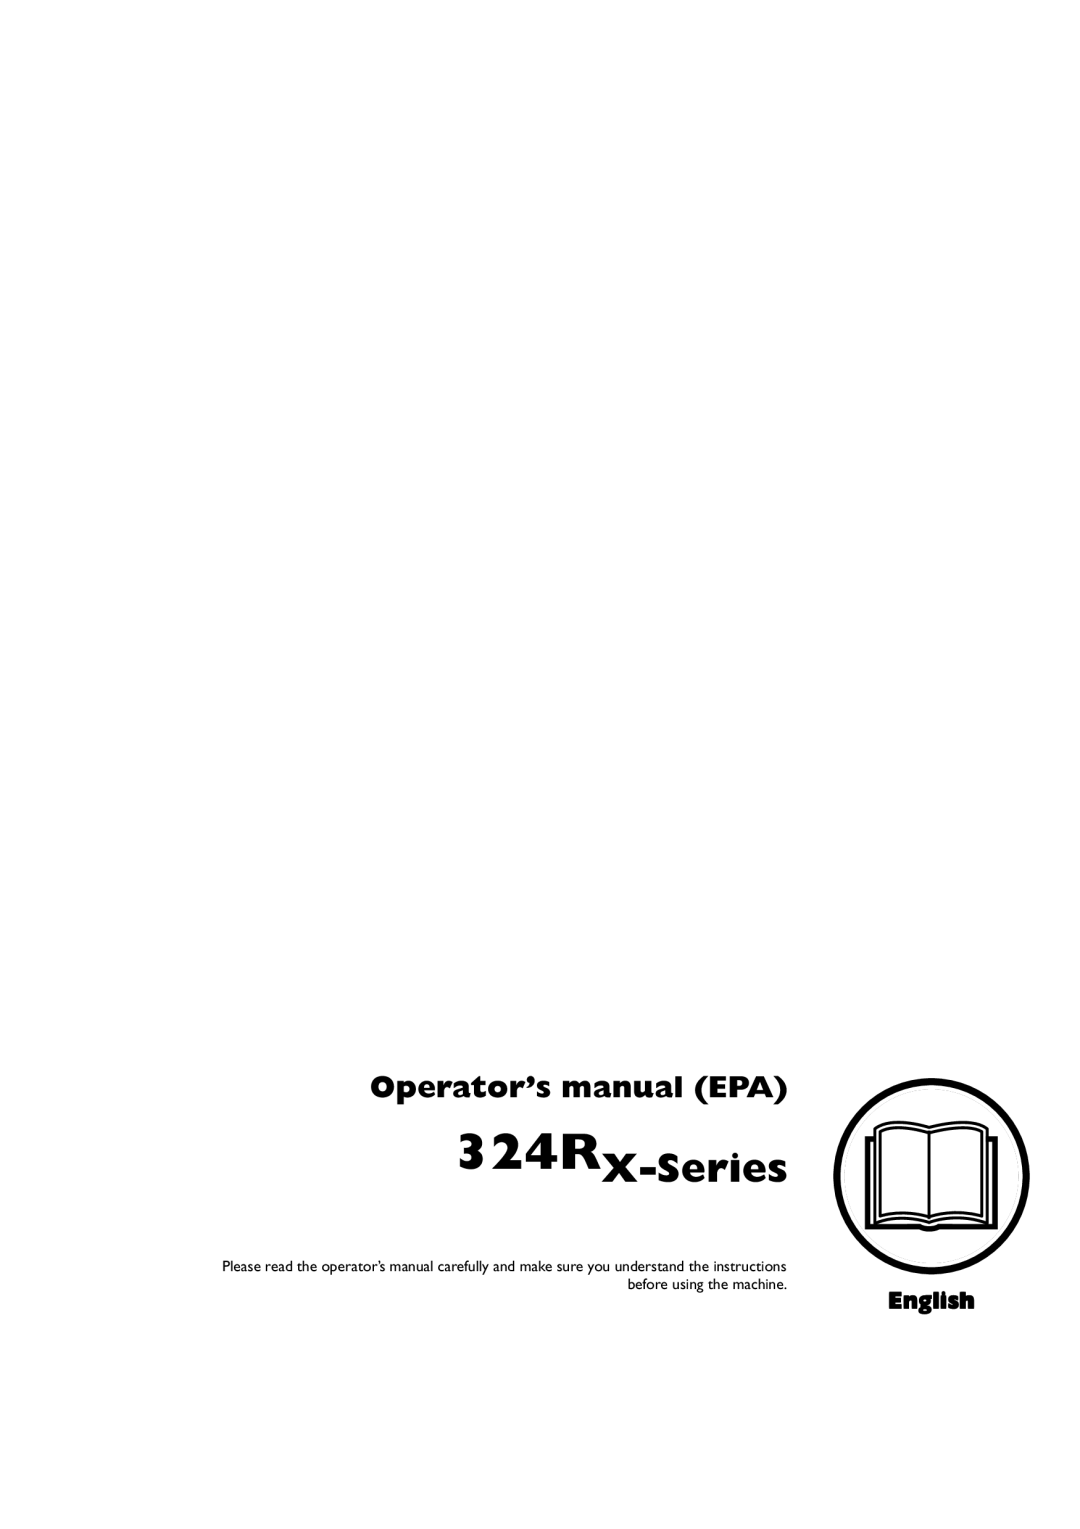 Husqvarna manual 324RX-Series, Operator’s manual EPA, English 